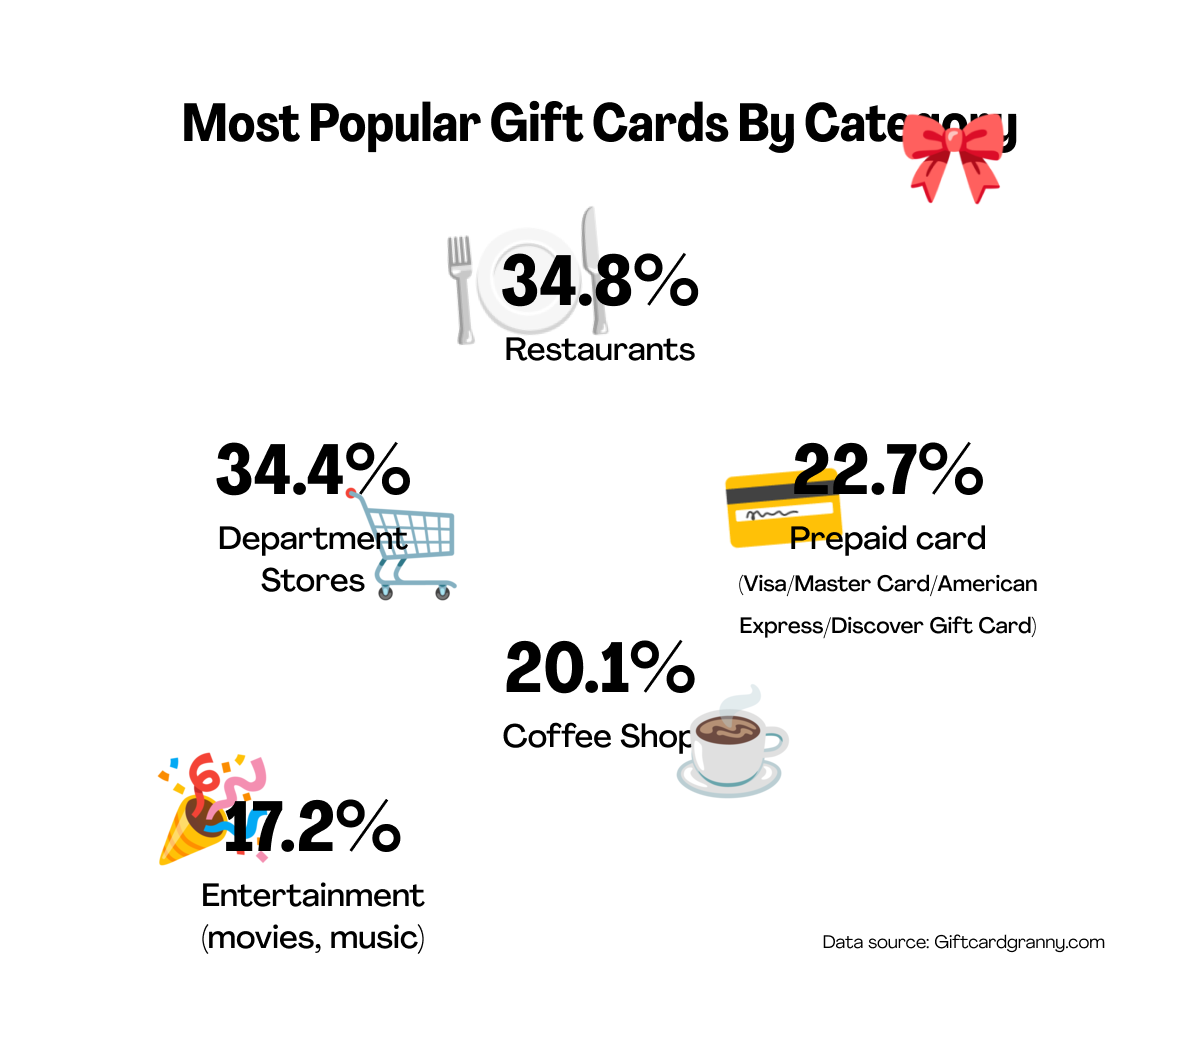 4 advantages of gift cards - Clover Blog